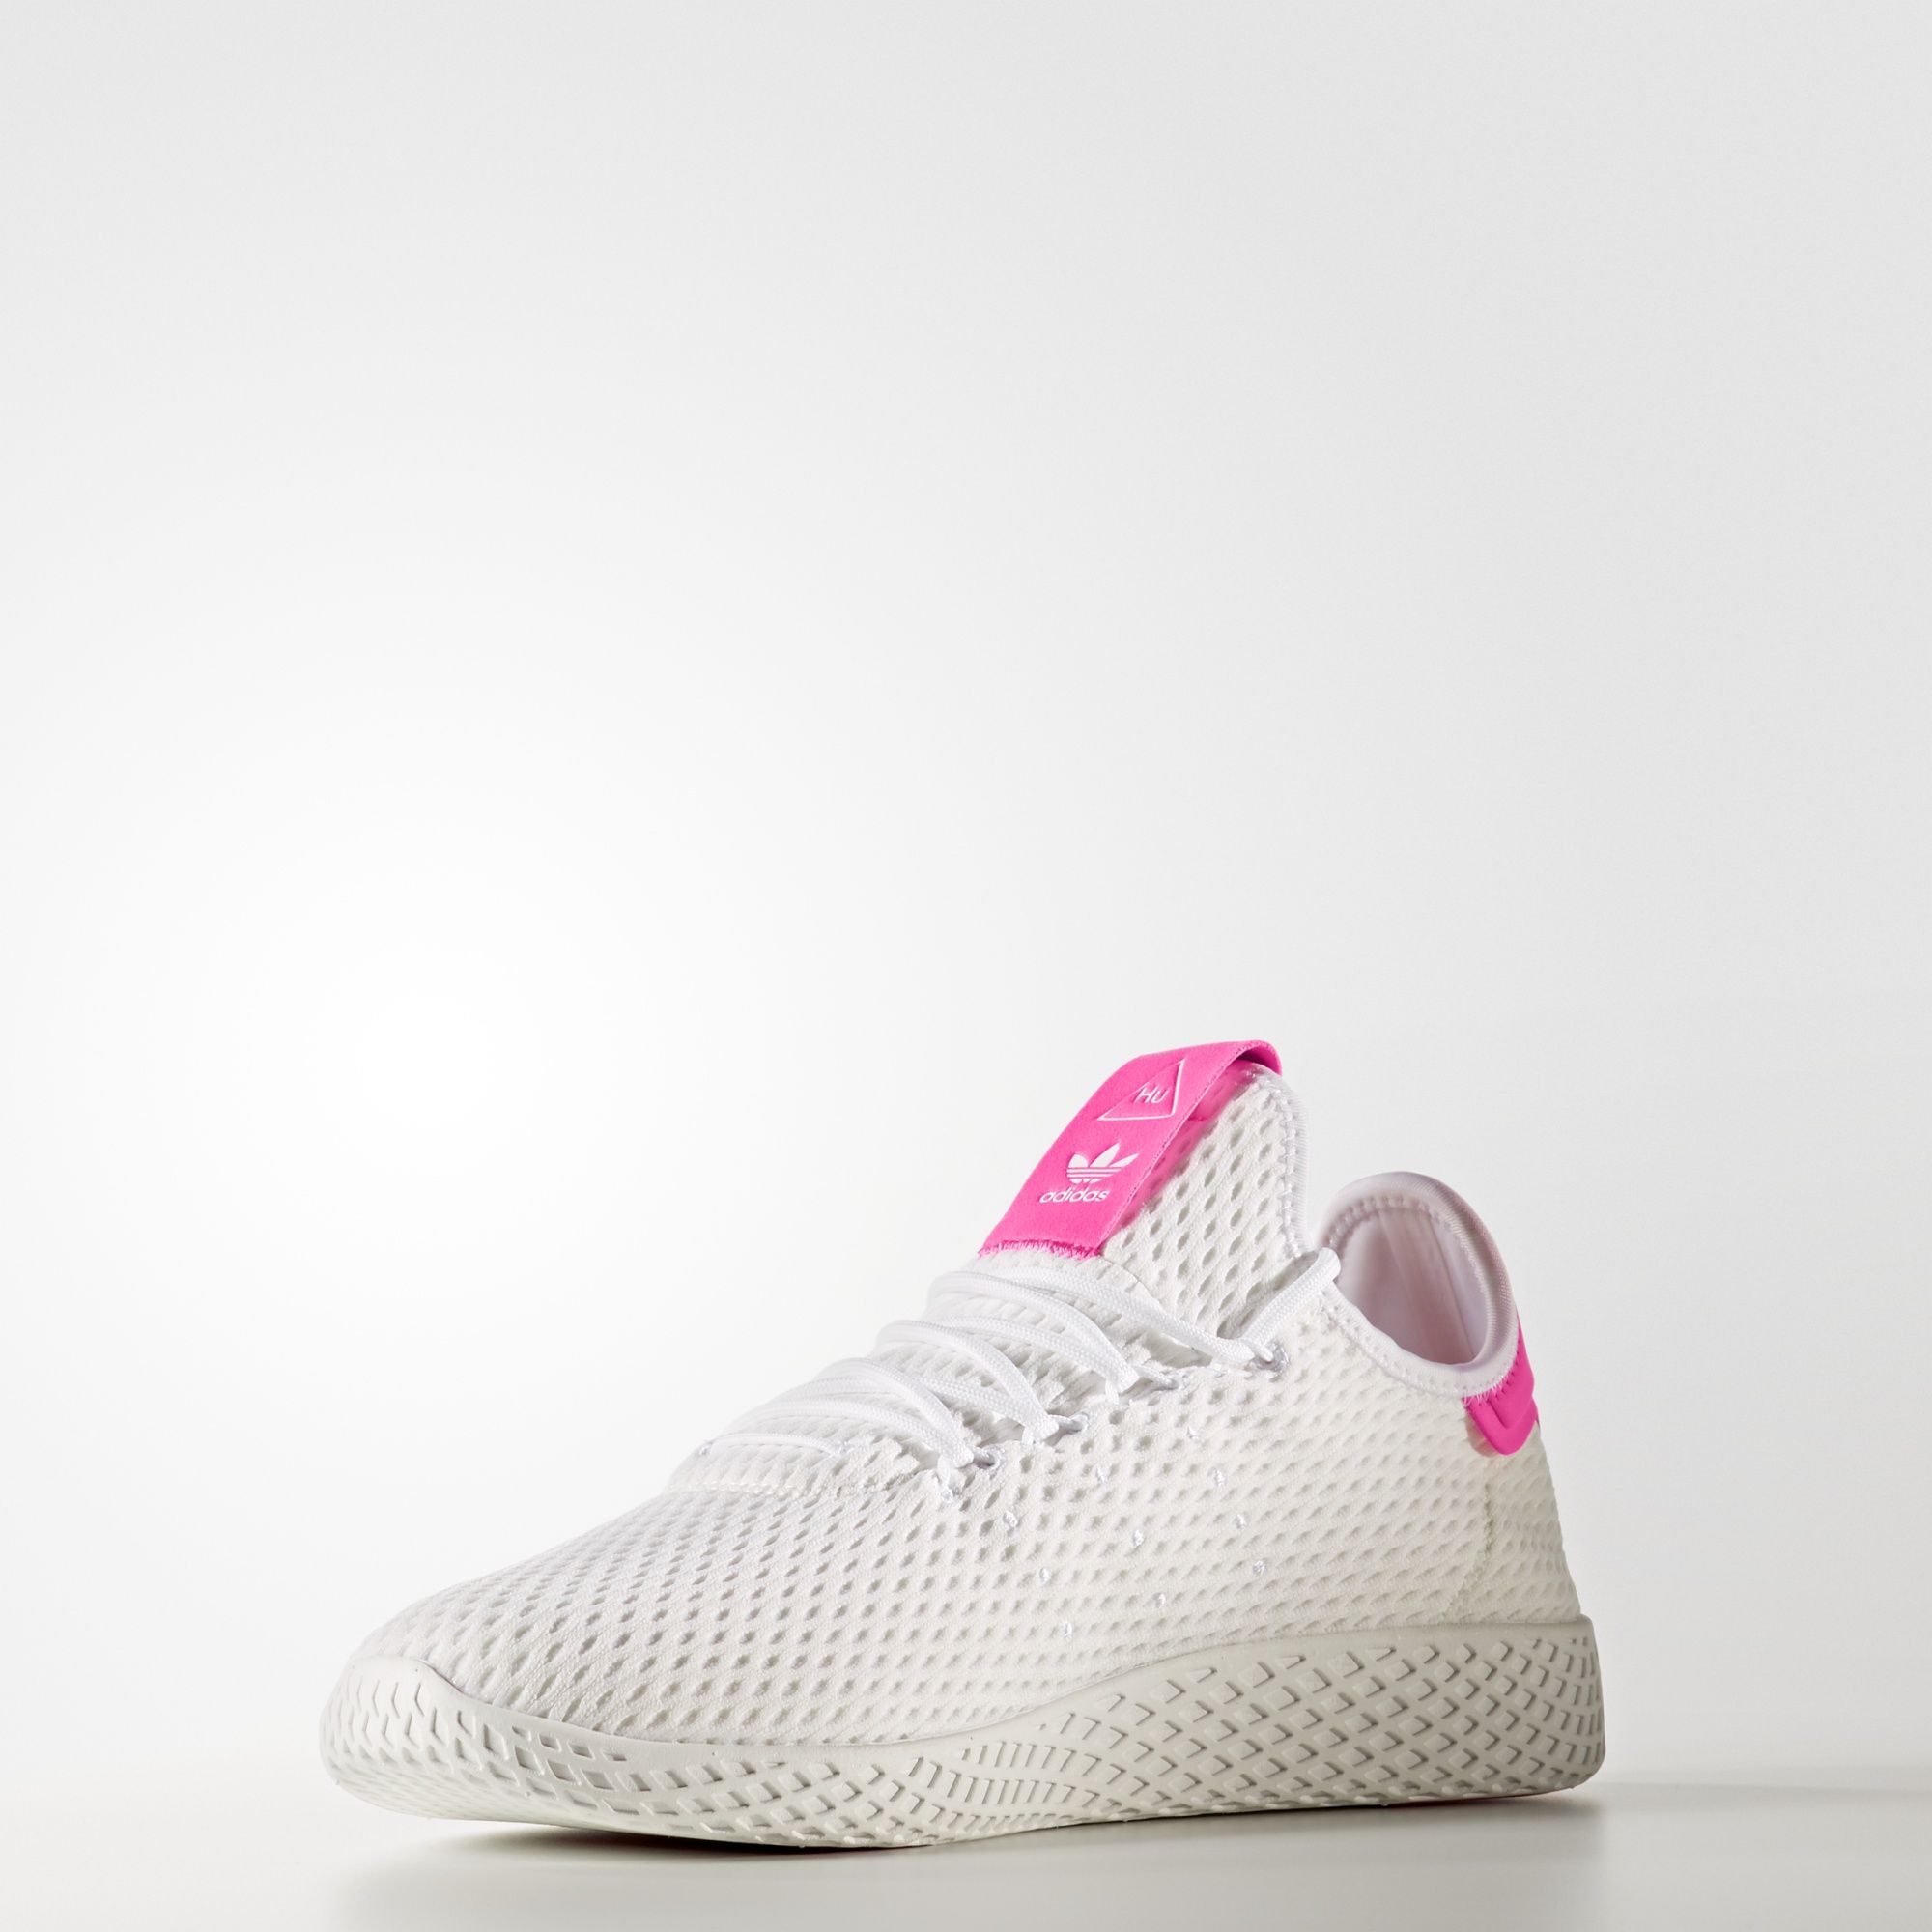 adidas-pharrell-williams-tennis-hu-white-semi-solar-pink-3